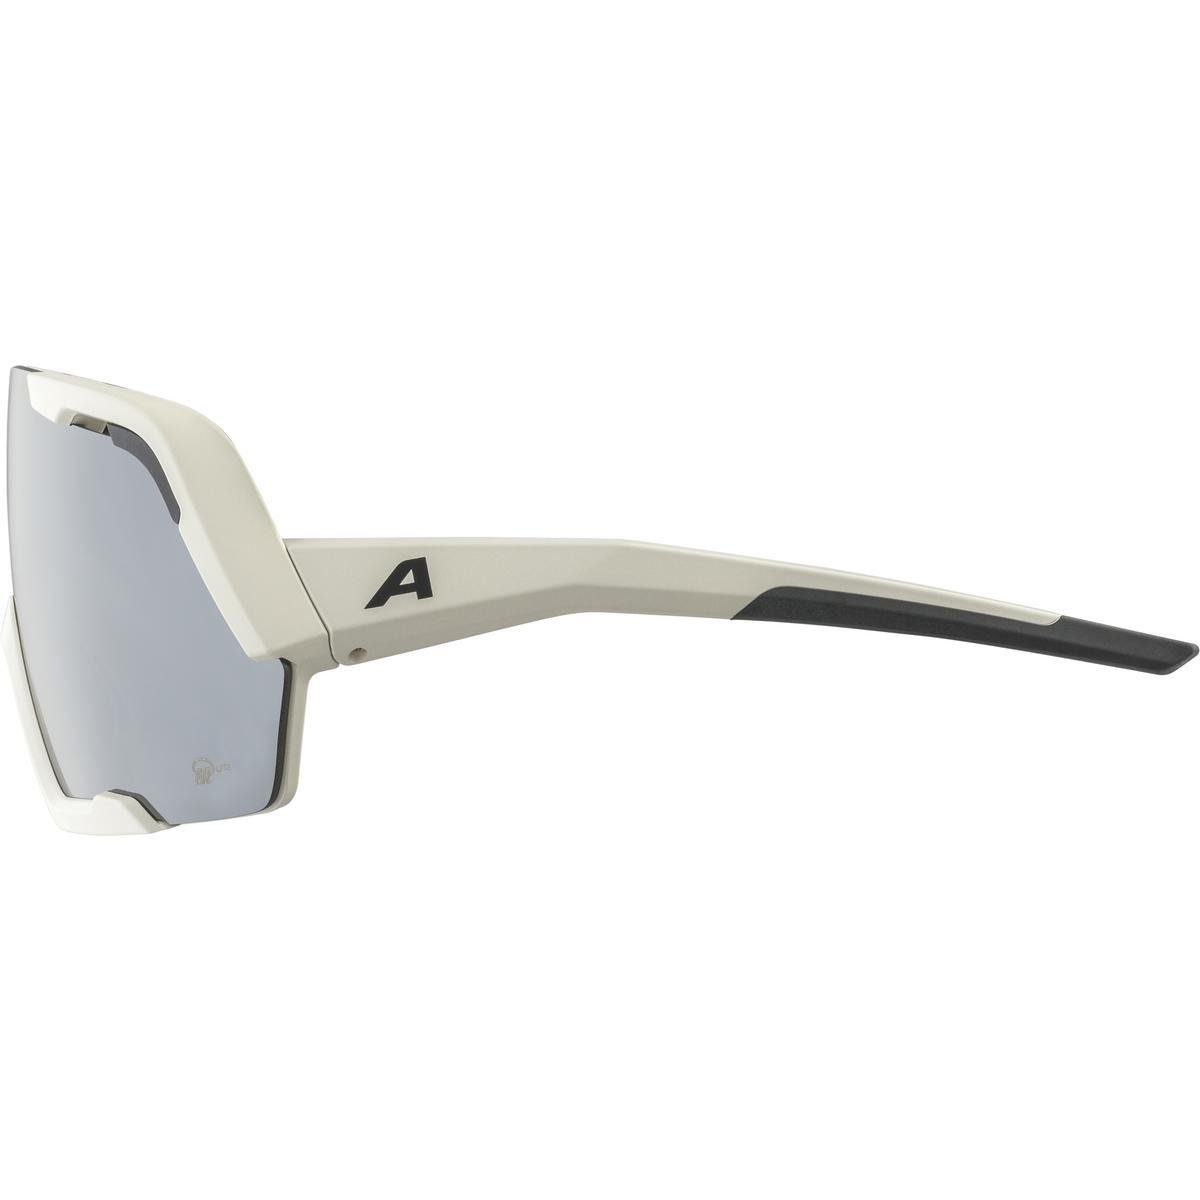 Alpina grau Sportbrille Q-LITE ROCKET BOLD Alpina Sonnenbrille A8682